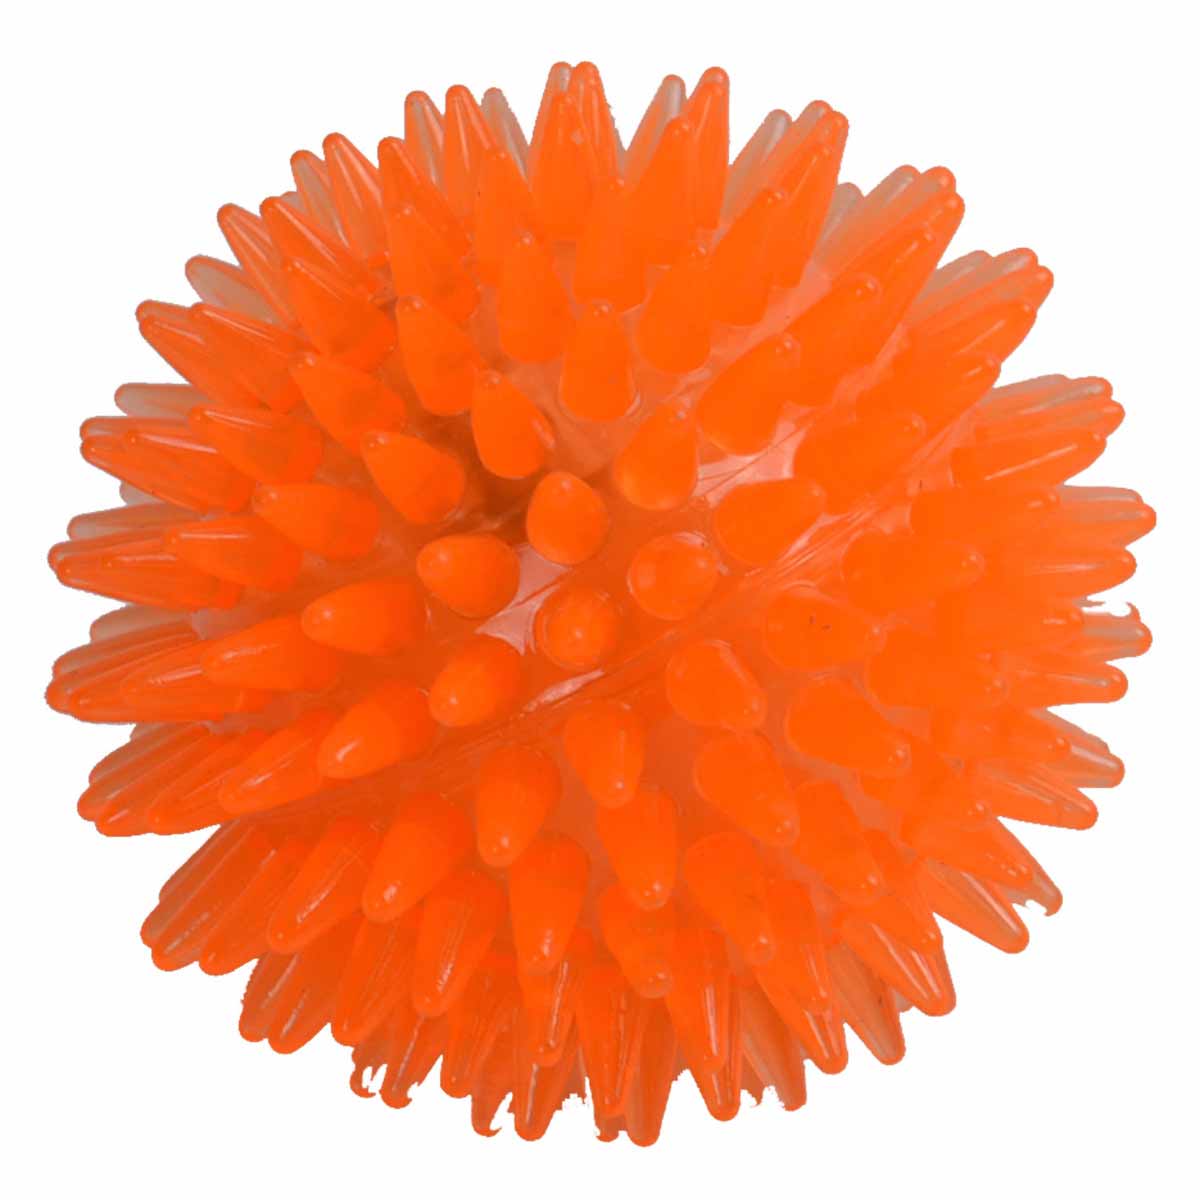 Pelota para perros luminosa y sonora naranja de 6 cm. de diámetro - juguetes para perros.